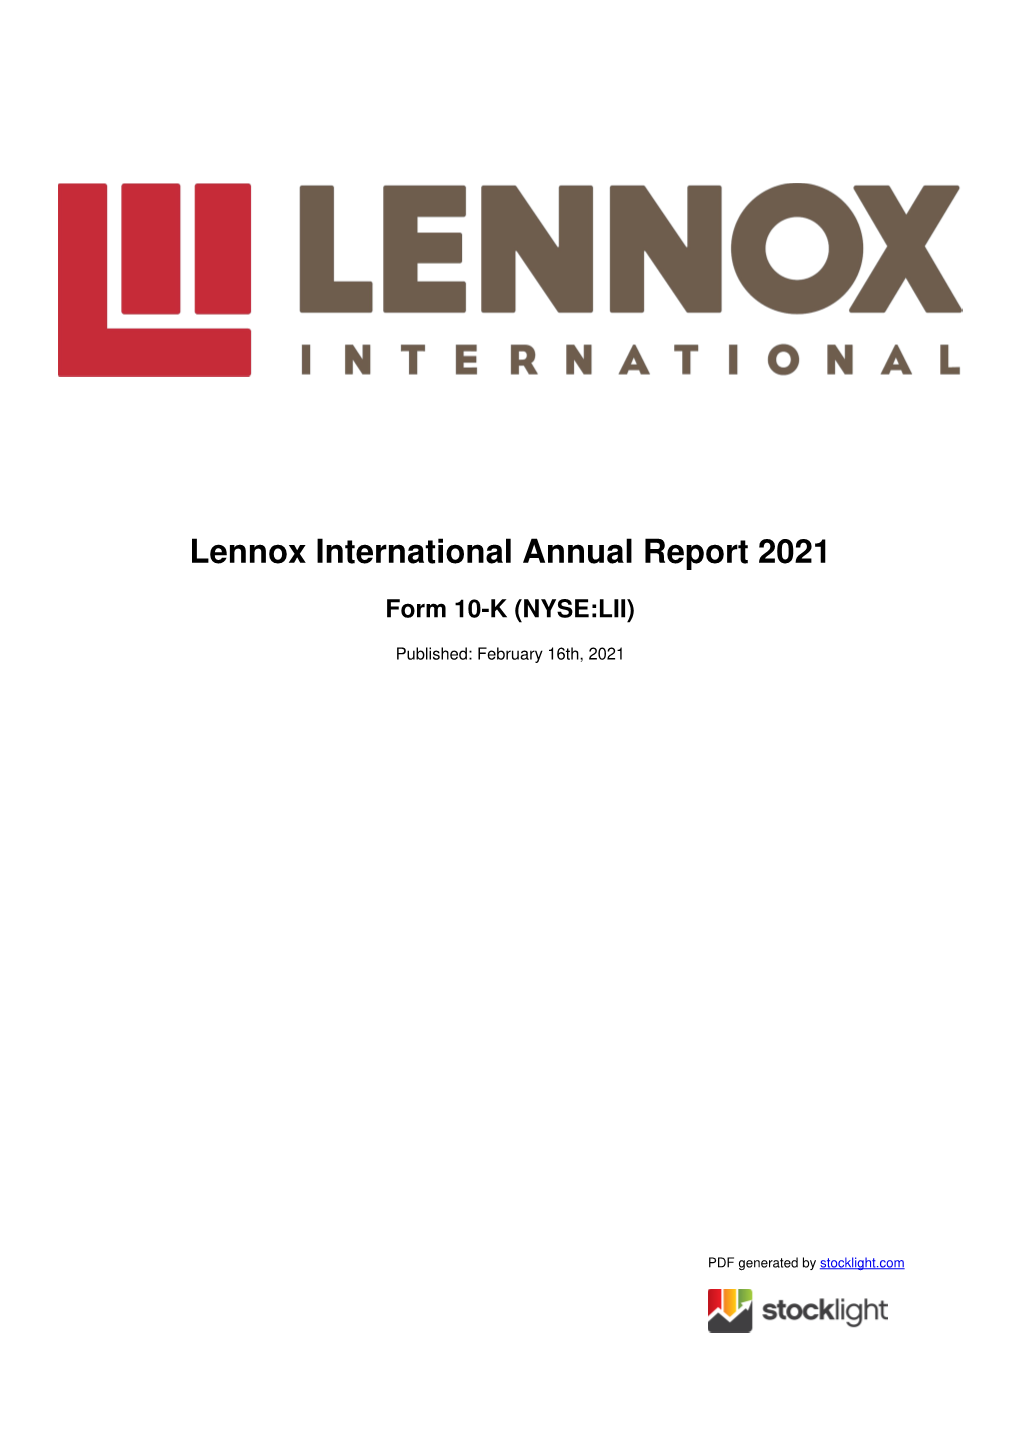 Lennox International Annual Report 2021